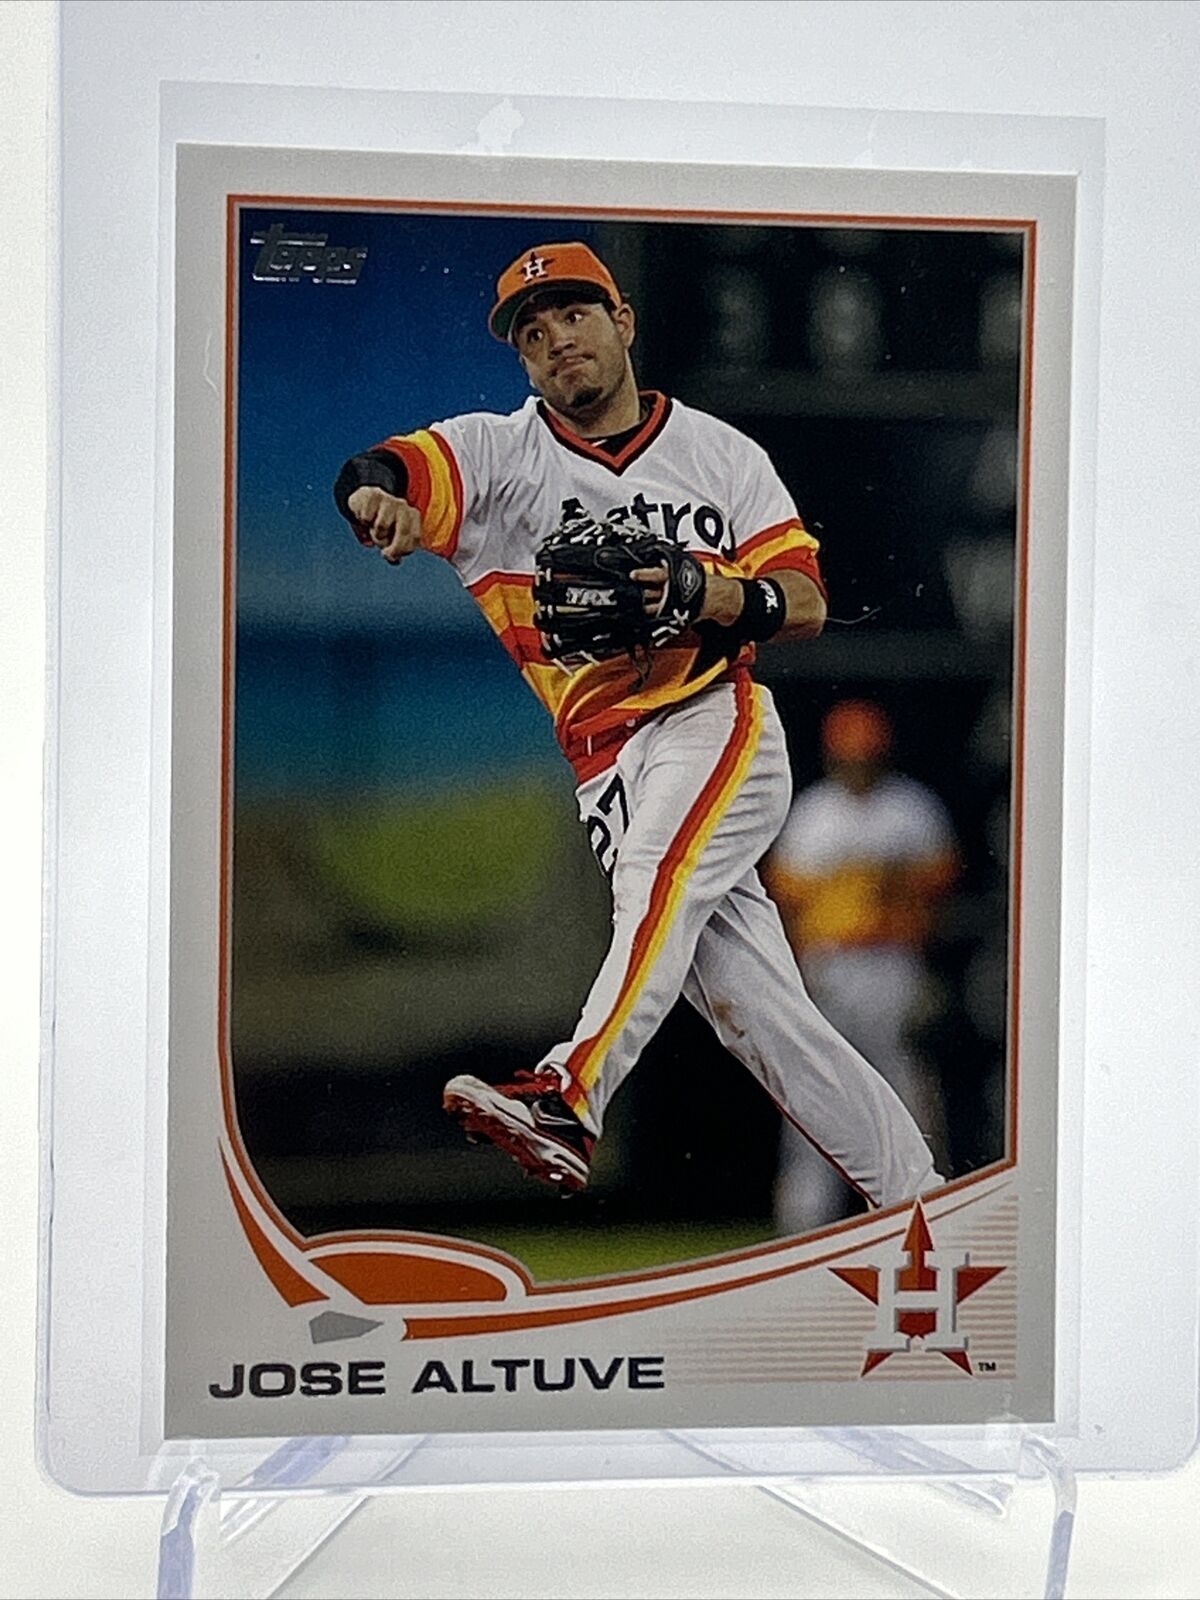 2013 Topps Jose Altuve Baseball Card #227 Mint 